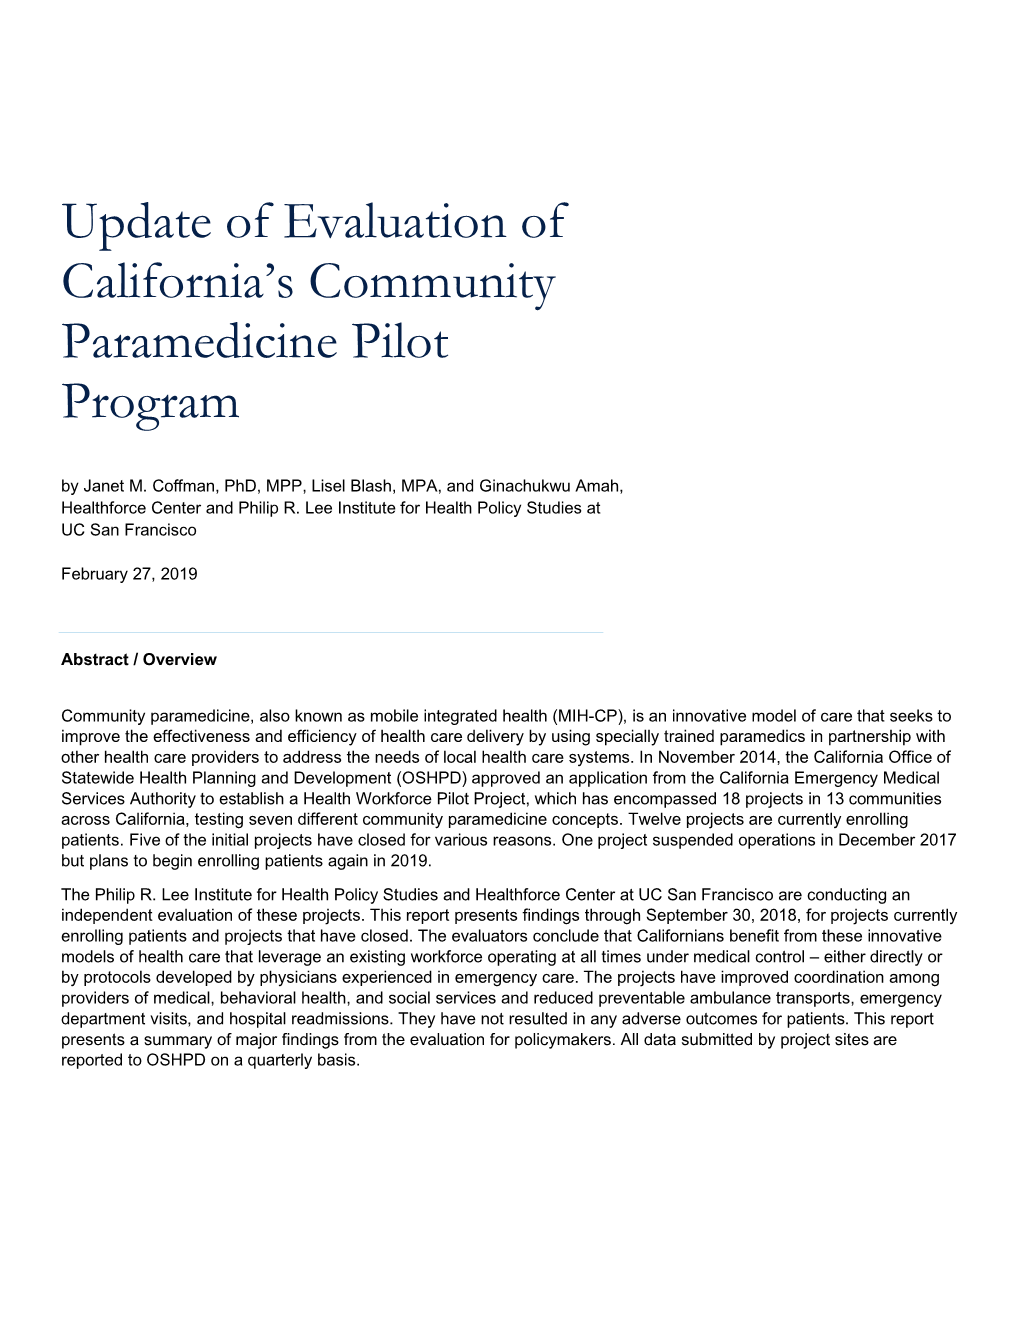 Update of Evaluation of California's Community Paramedicine Pilot